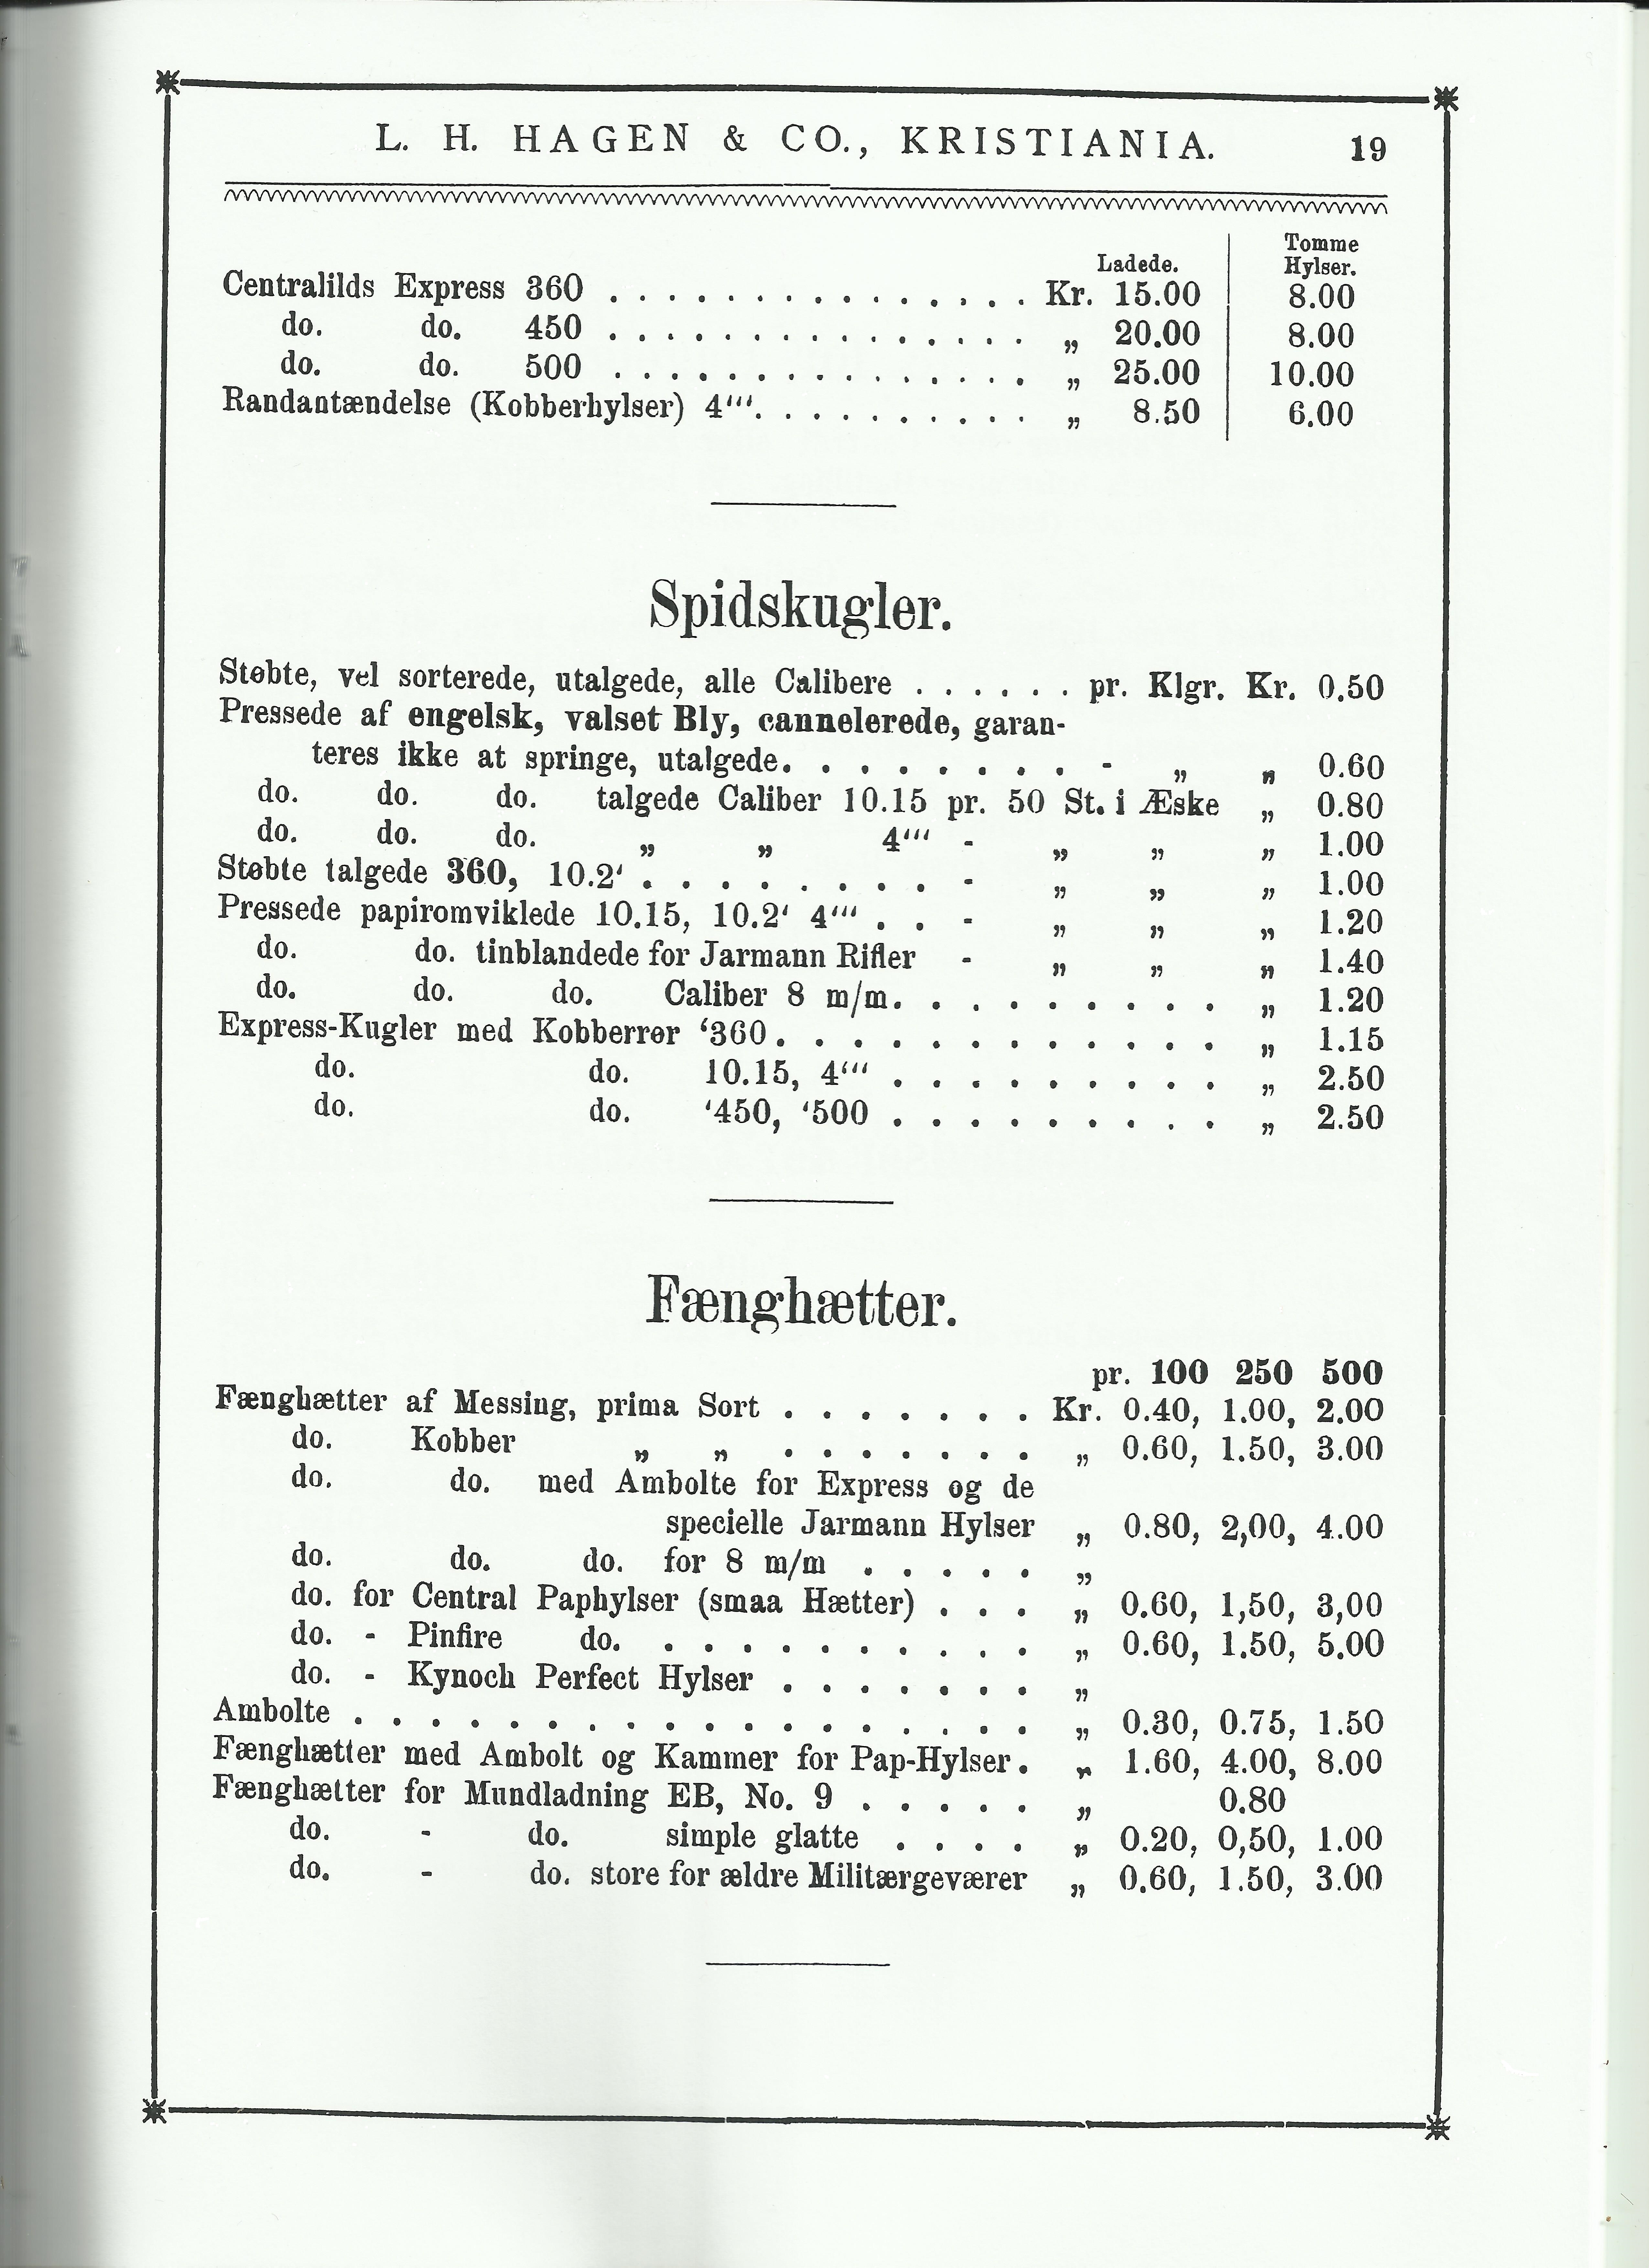 ./doc/diverse/Katalog-Hagen-189x-Side-19.jpg